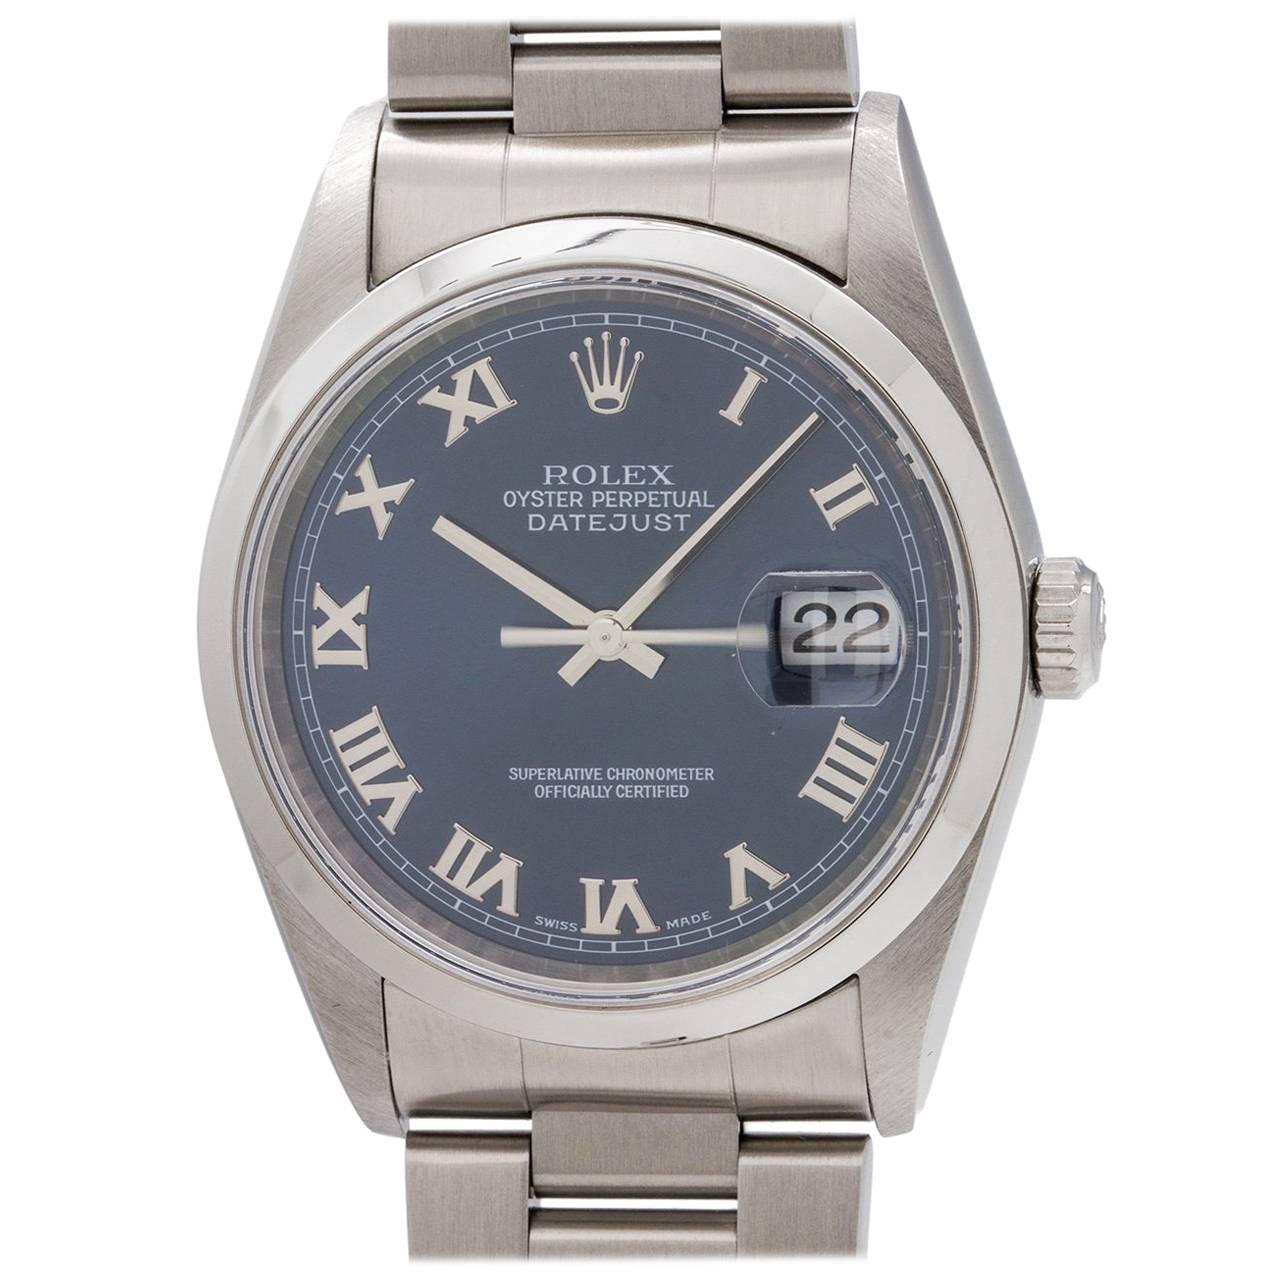 Rolex Stainless Steel Datejust self winding Wristwatch Ref 16200, circa 2002